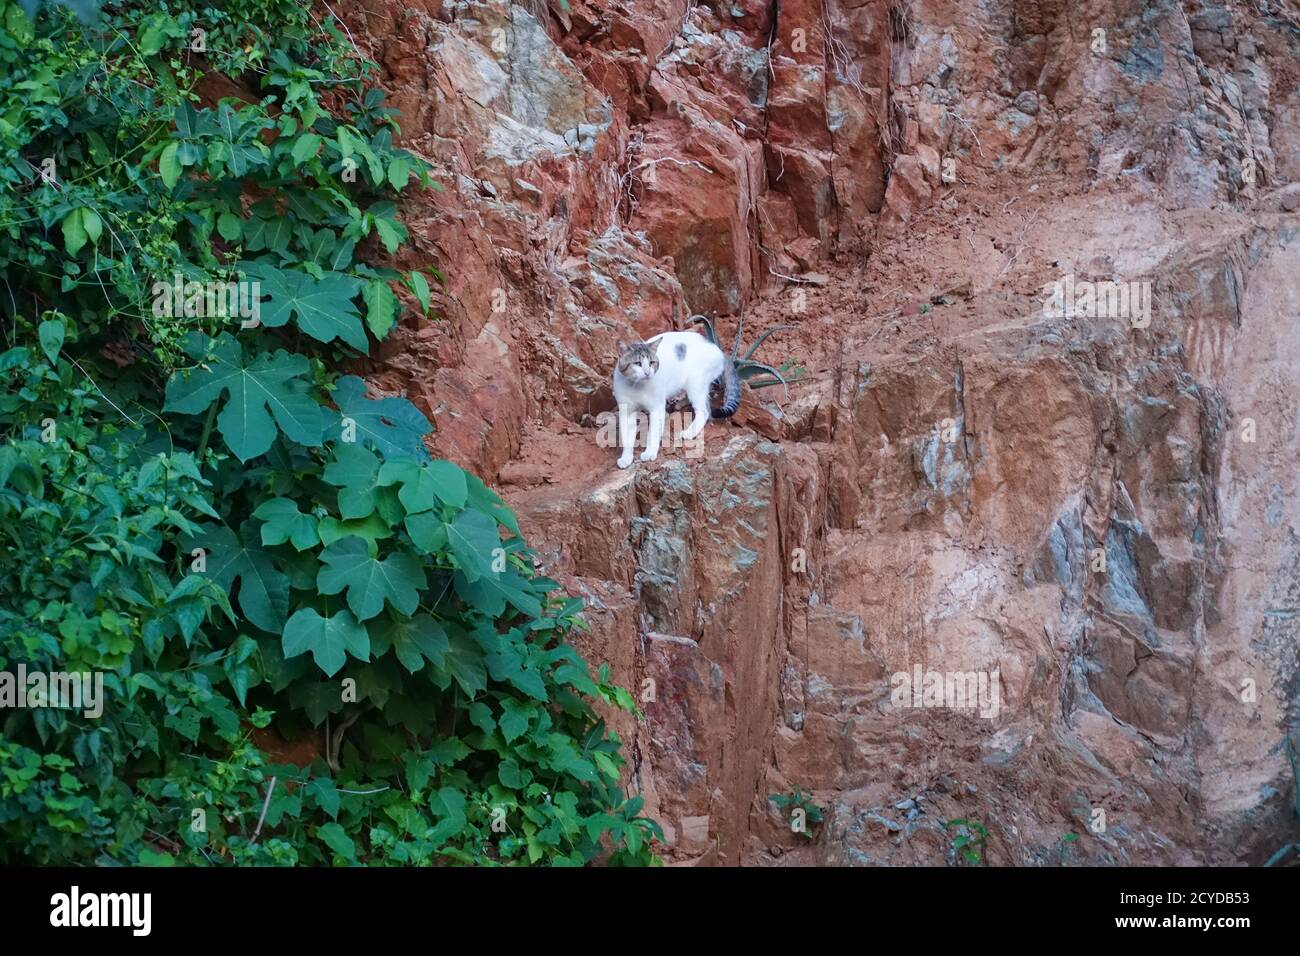 White big male cat is climbing steep mountain walls Stock Photo